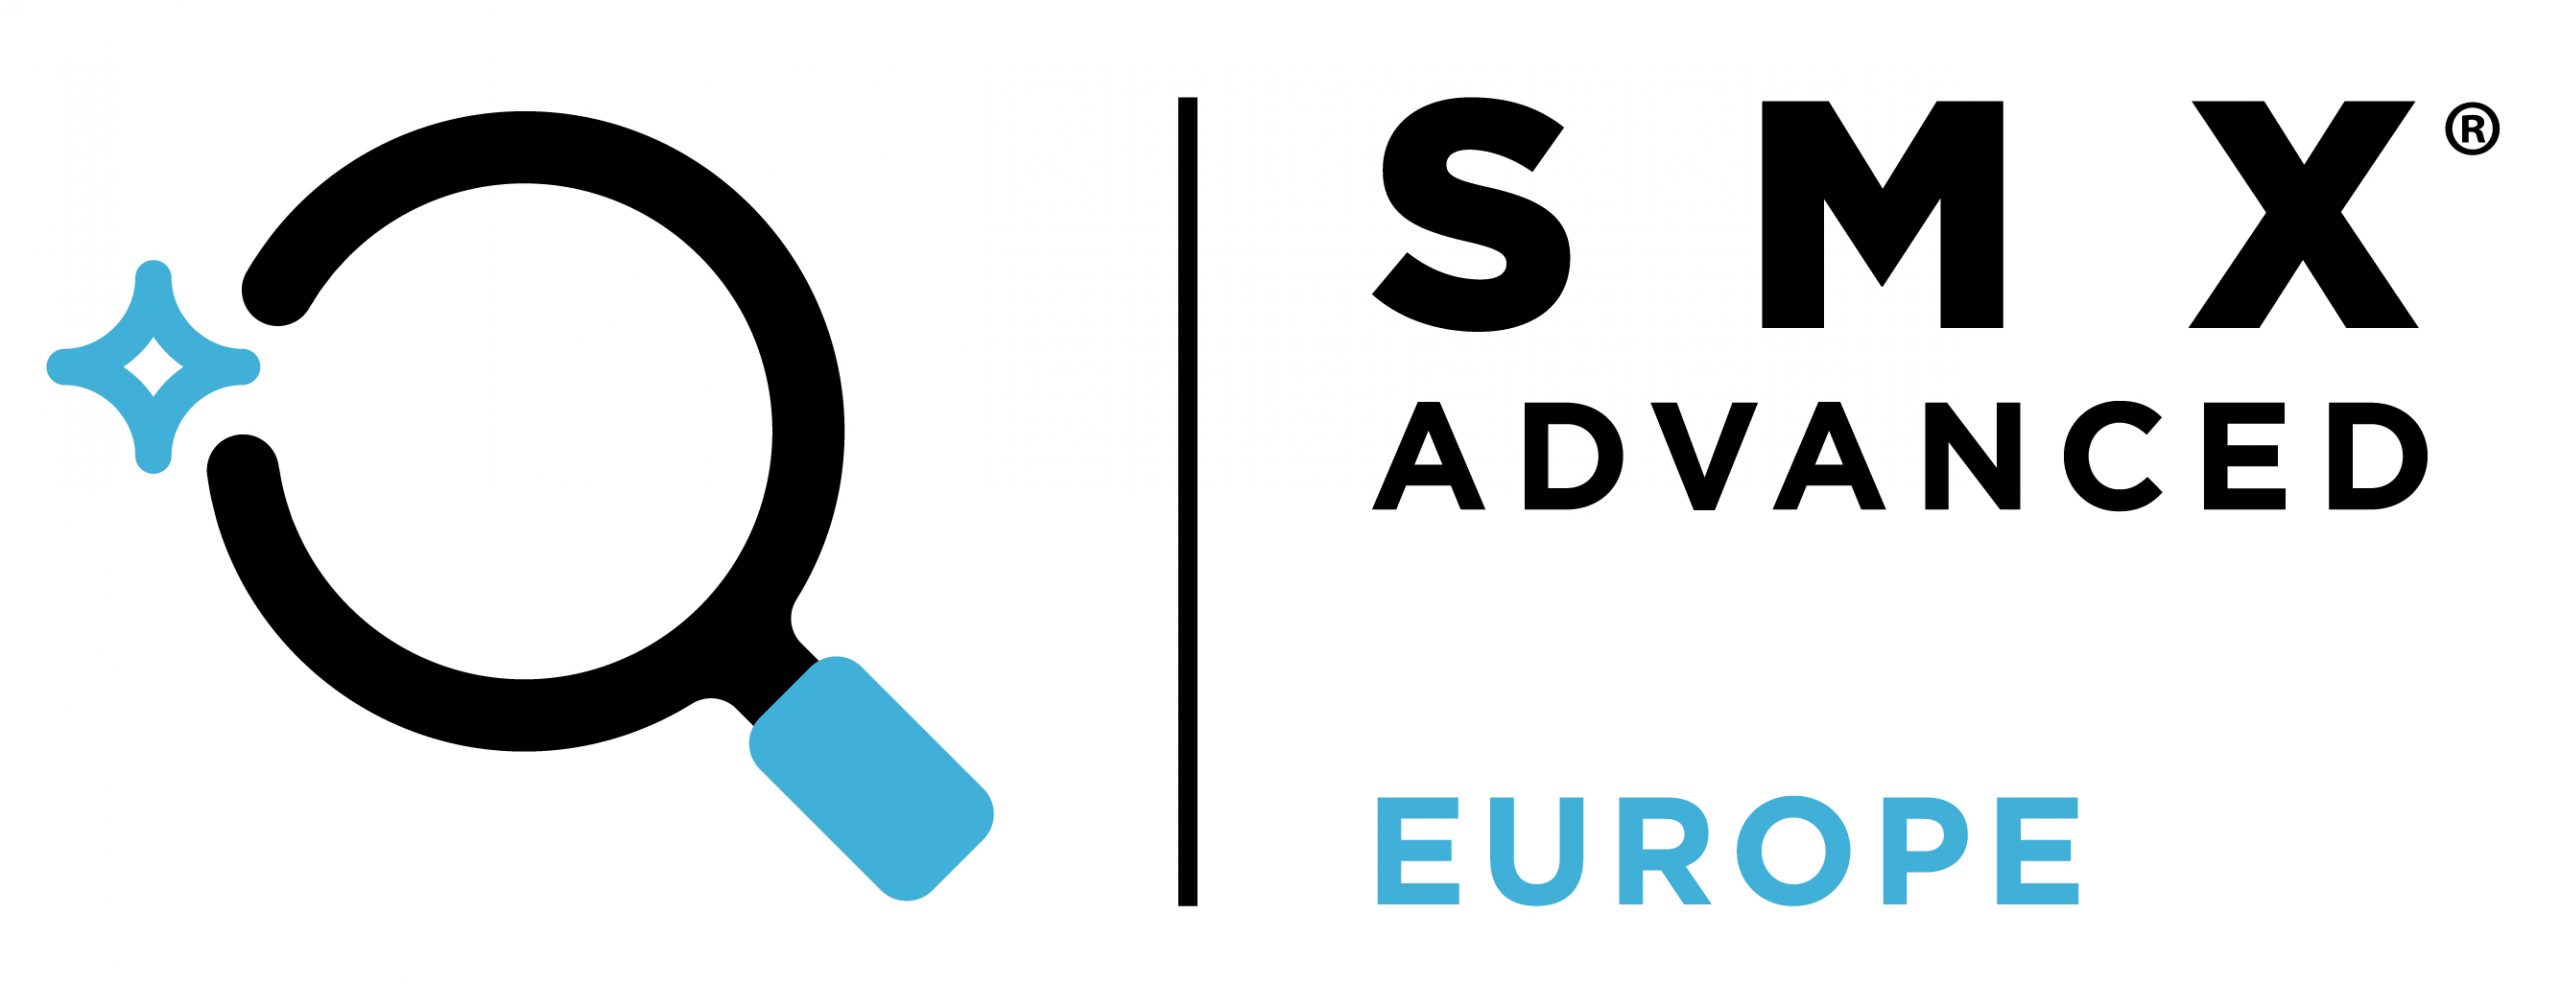 SMX Advanced Europe